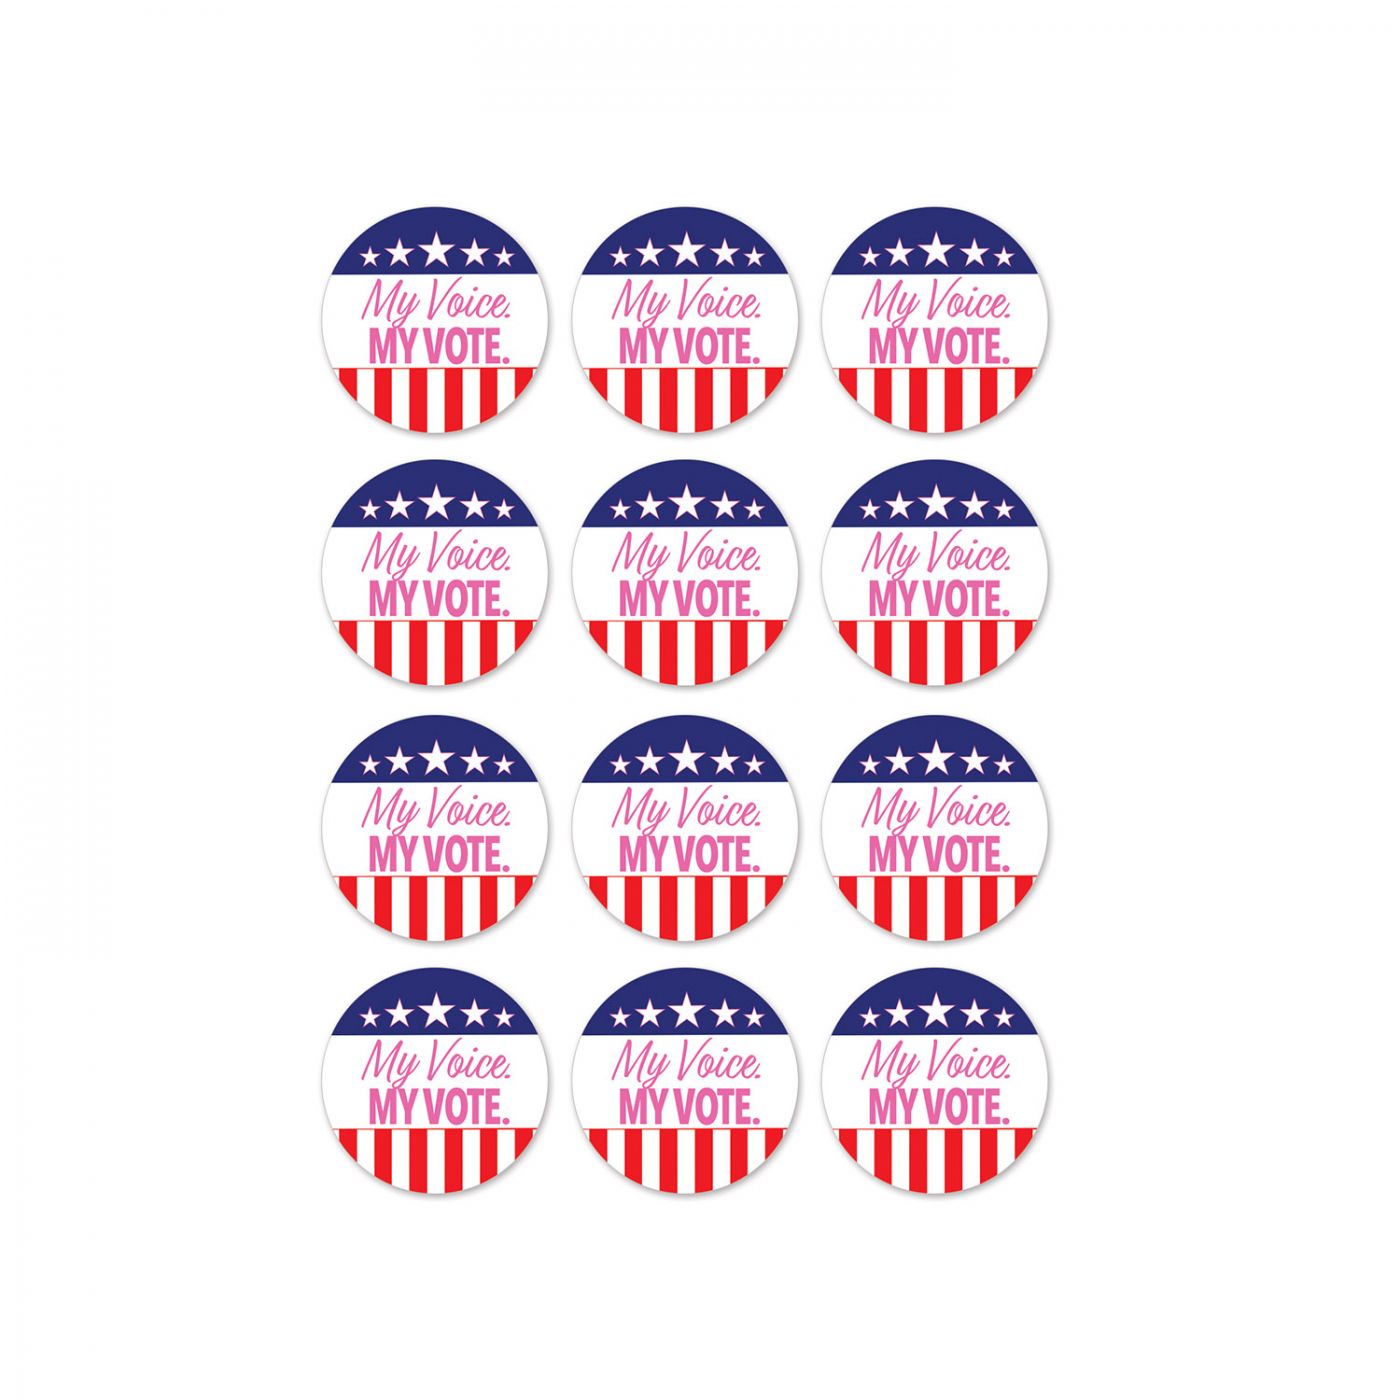 My Voice. My Vote. Stickers image